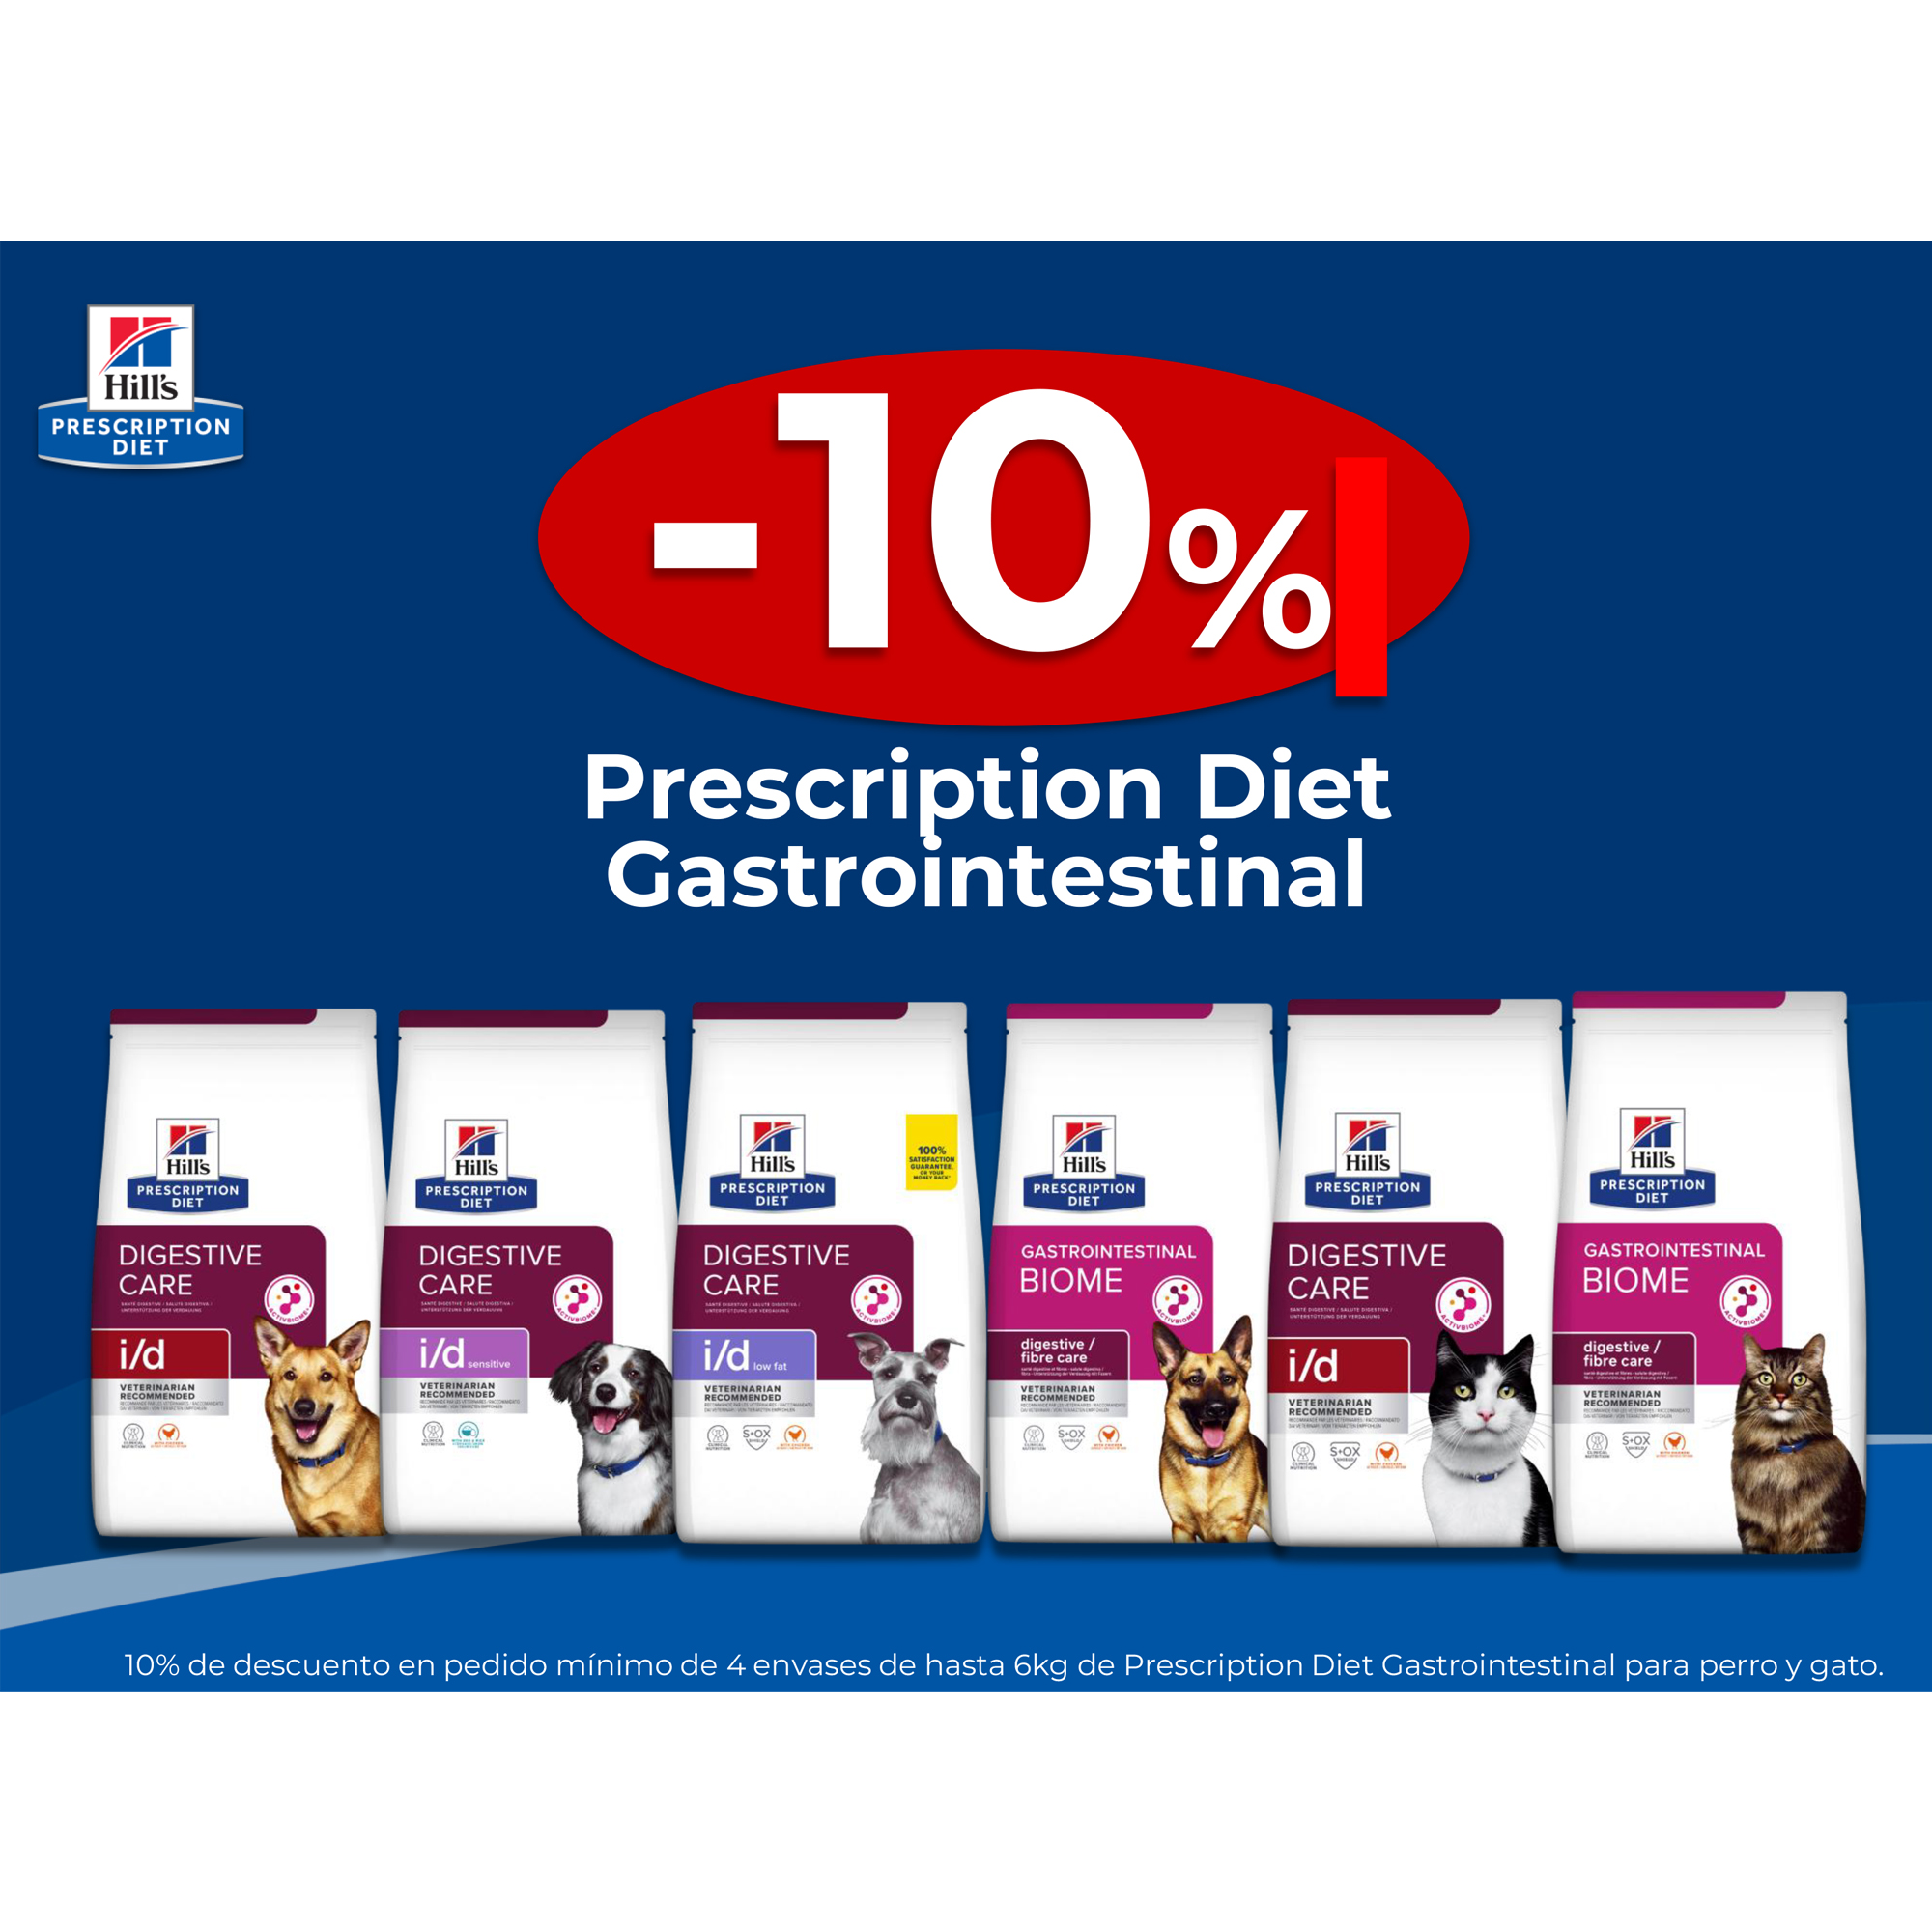 -10% Prescription Diet Gastrointestinal